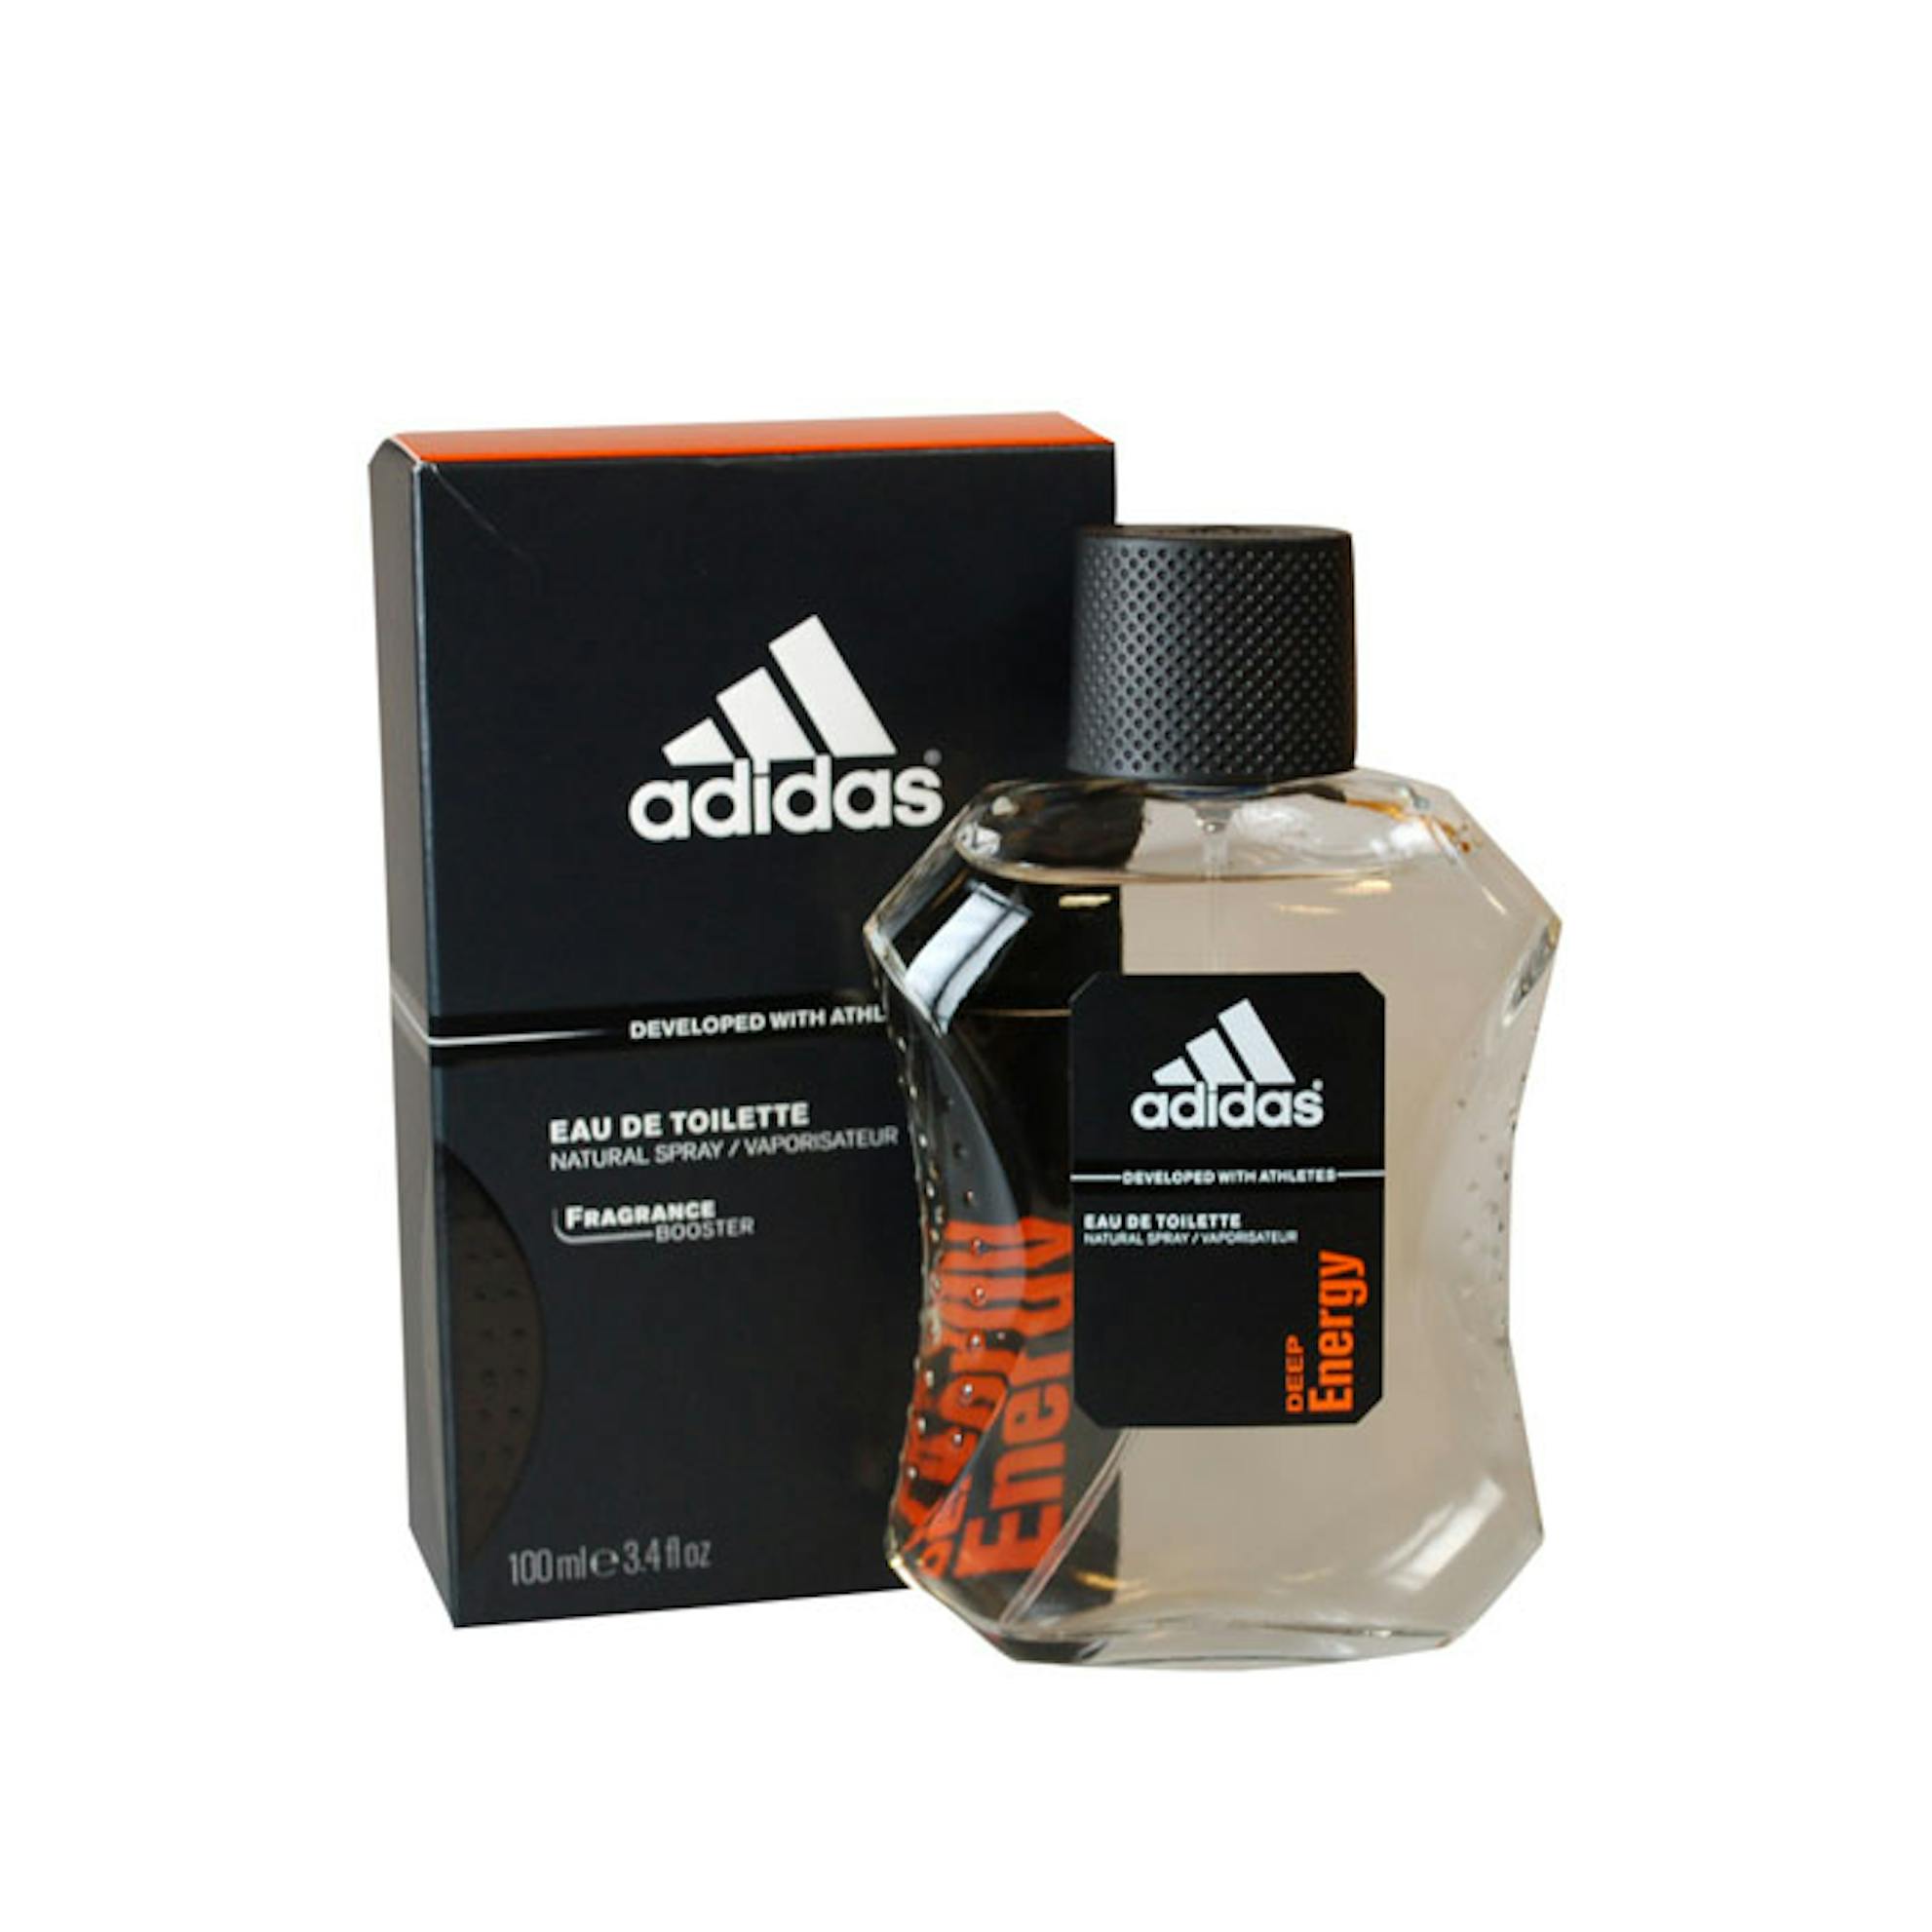 Adidas Eau De Toilette Spray | The Fragrance